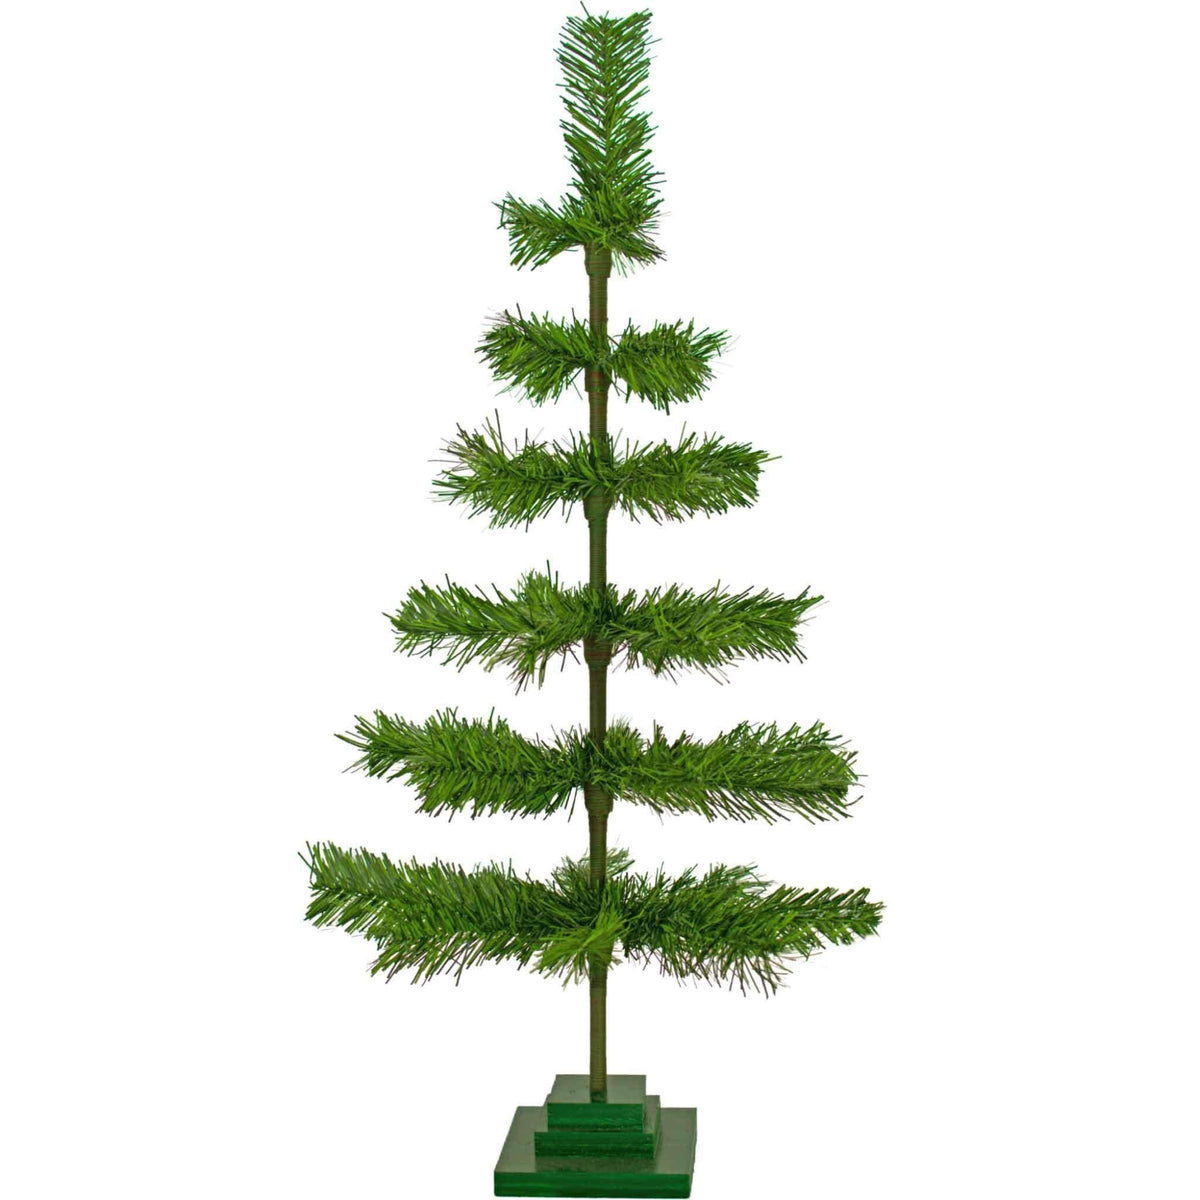 36in Alpine Green Tinsel Christmas Tree sold at leedisplay.com